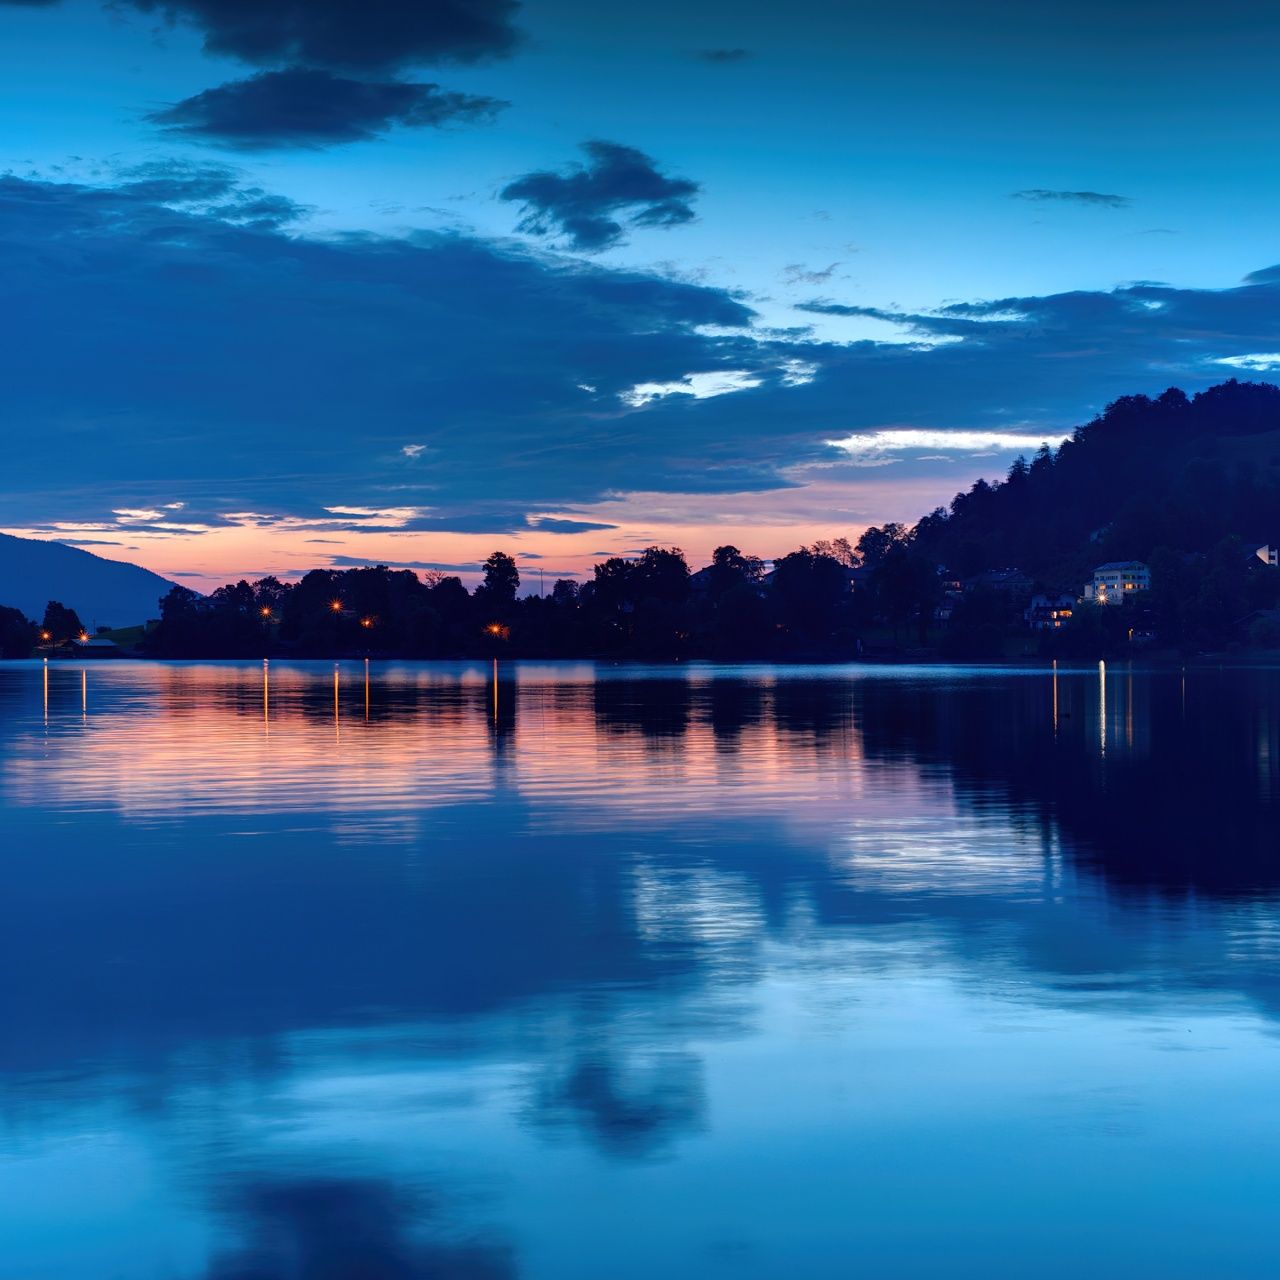  See Hintergrundbild 1280x1280. Tegernsee Lake Wallpaper 4K, Bavarian Alps, Germany, Sunset